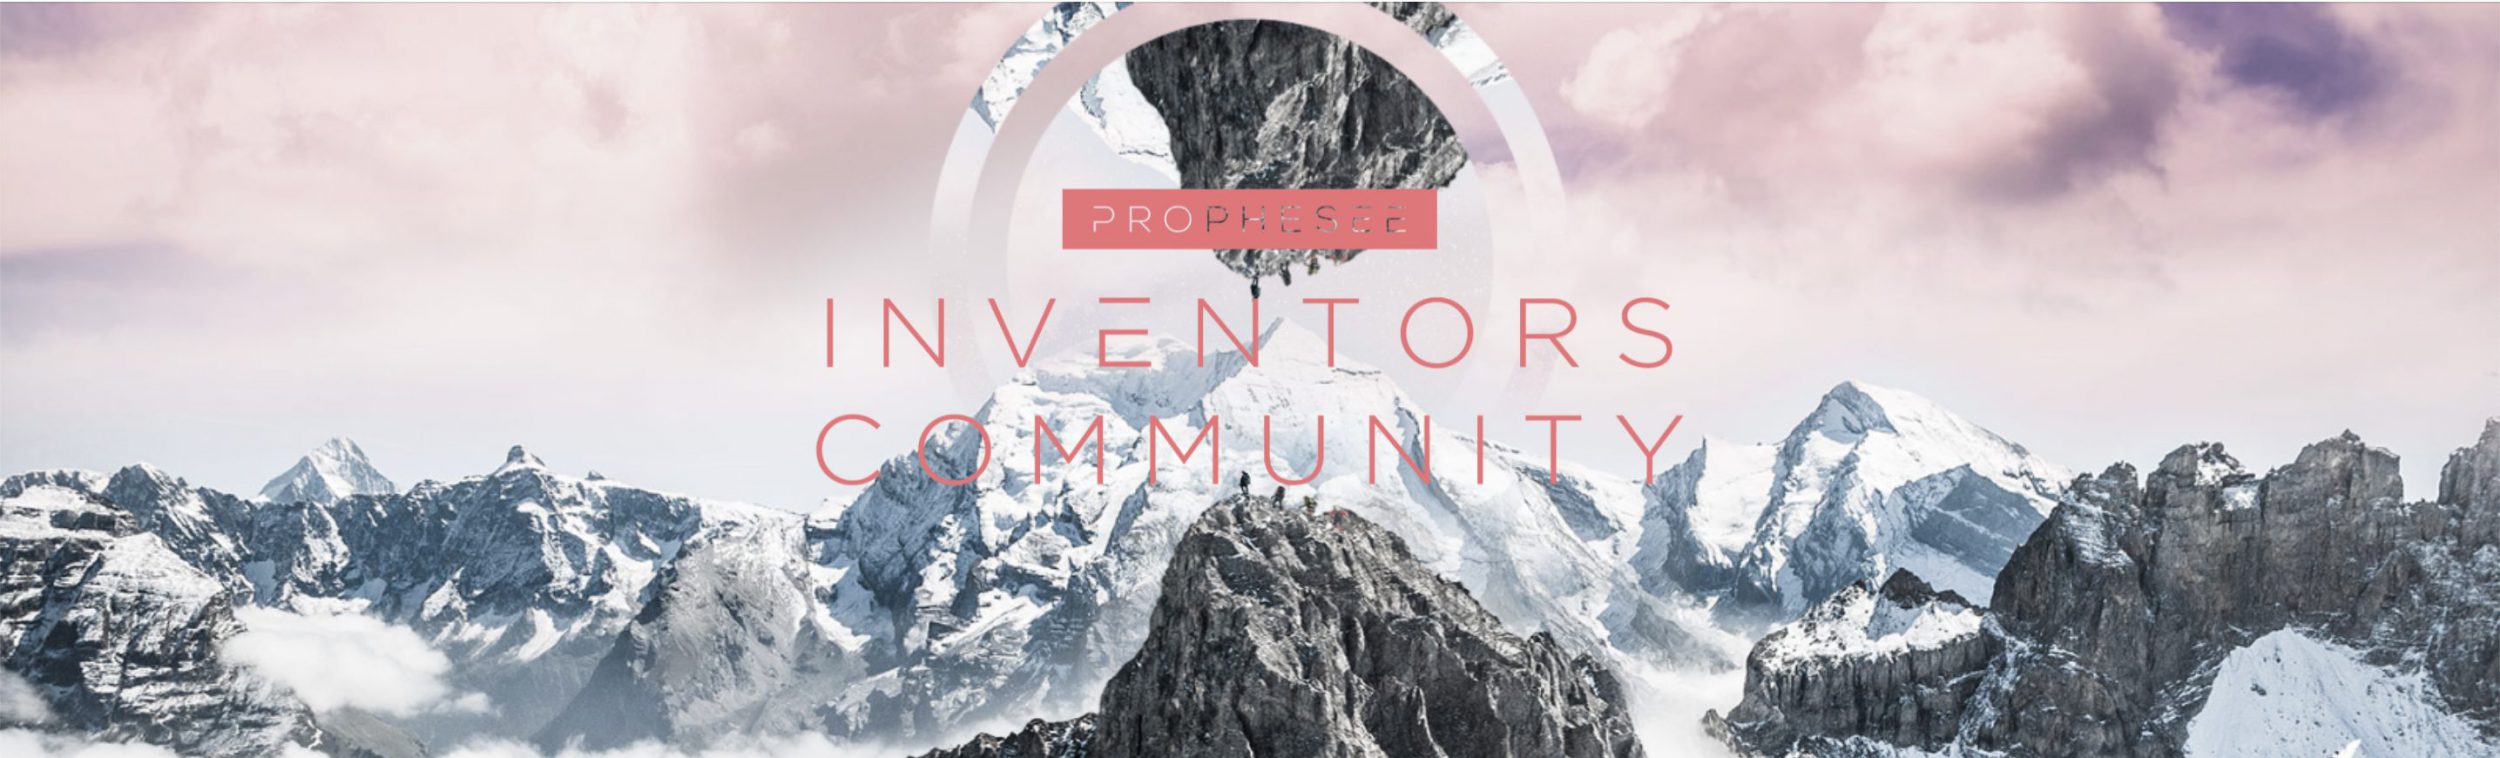 Prophesee Inventors community